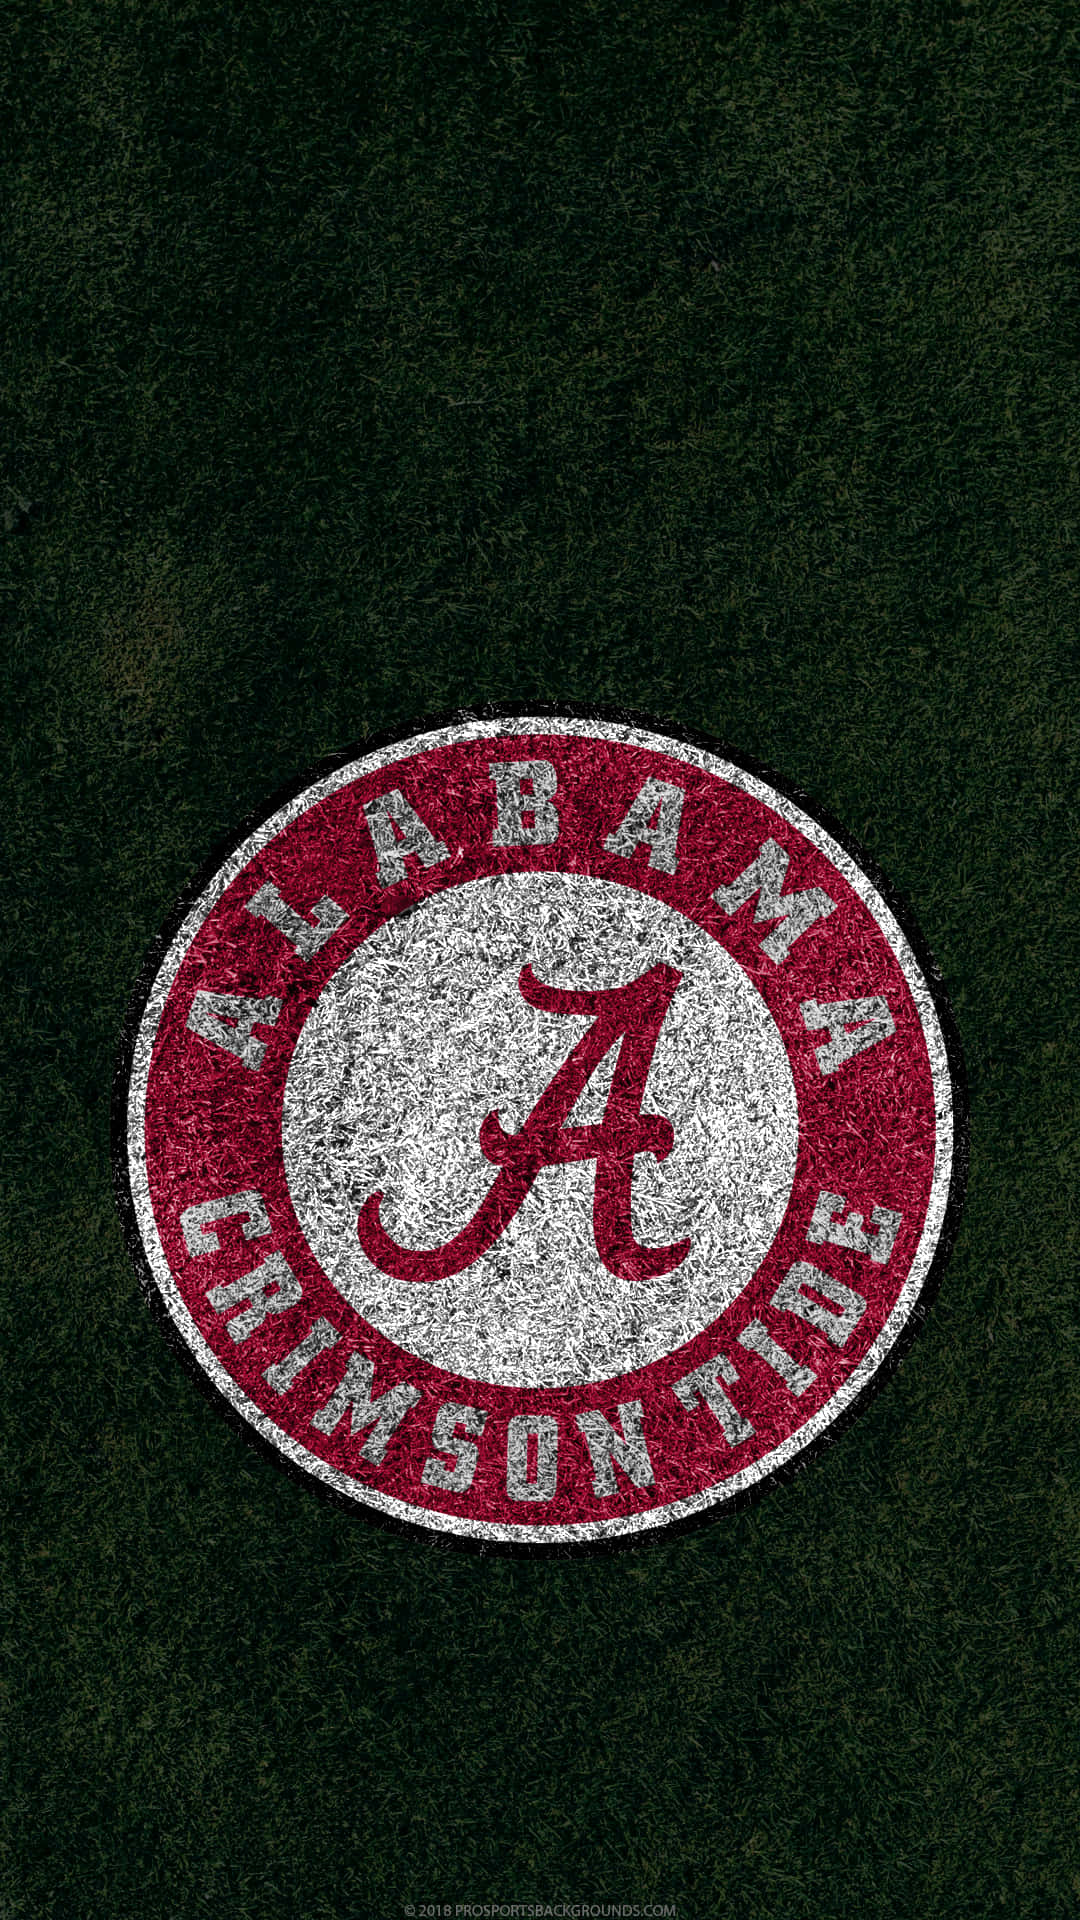 Alabama Football Iphone Wallpaper